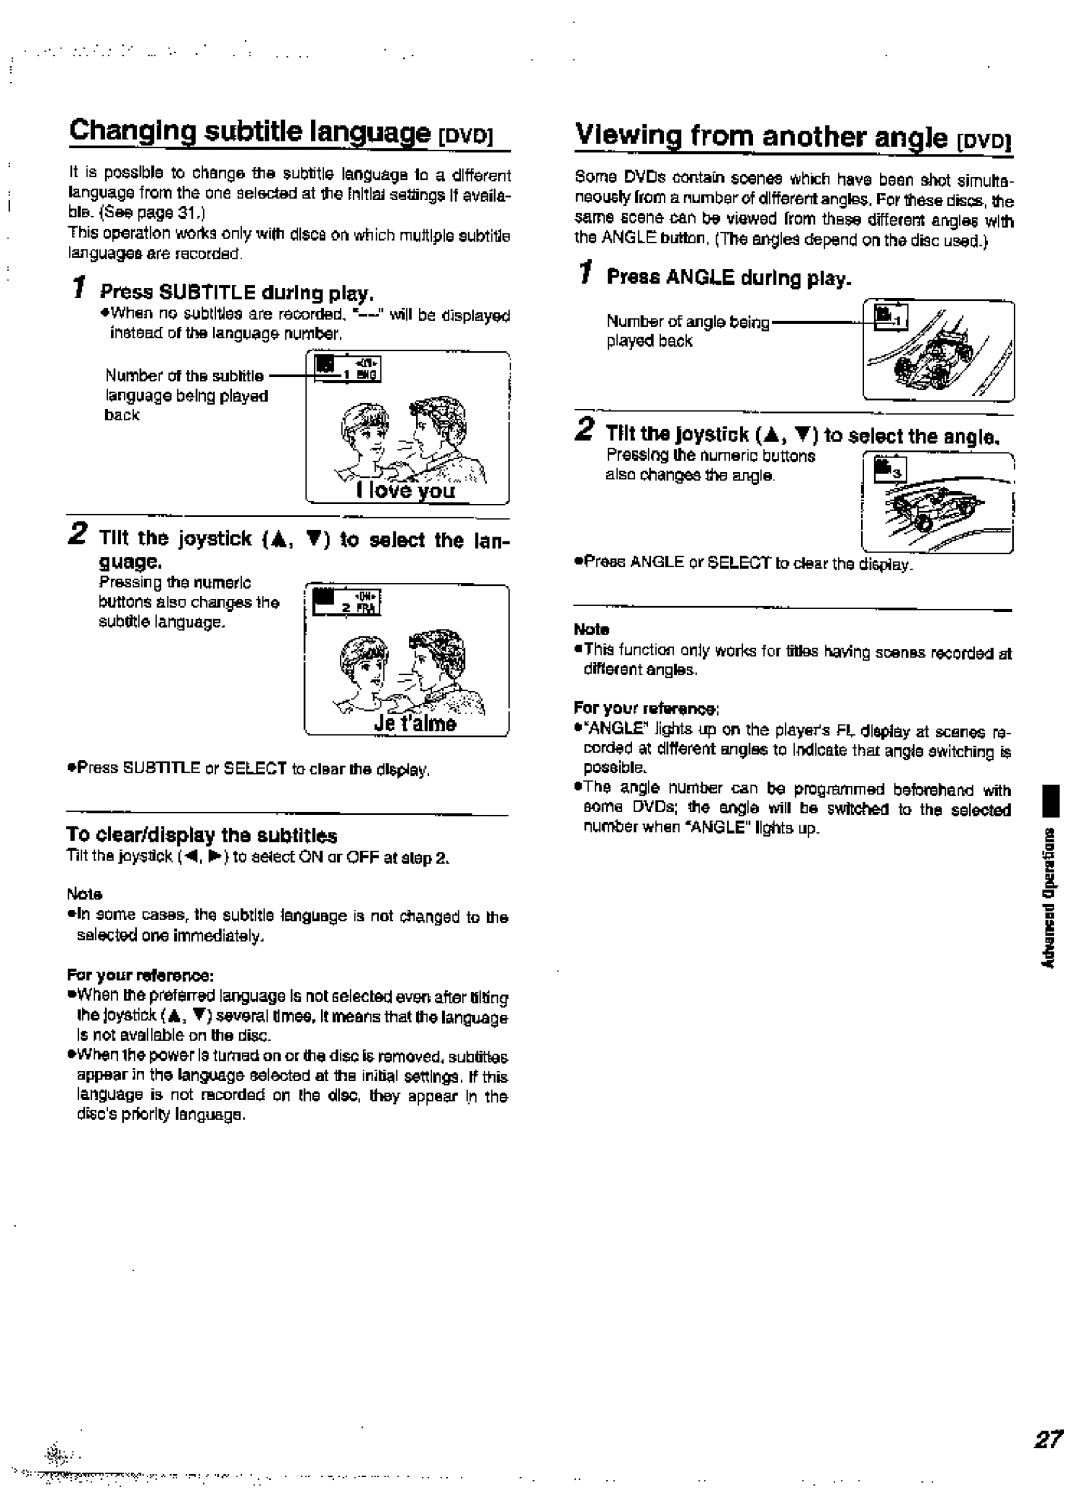 Panasonic DVD-A360A manual 